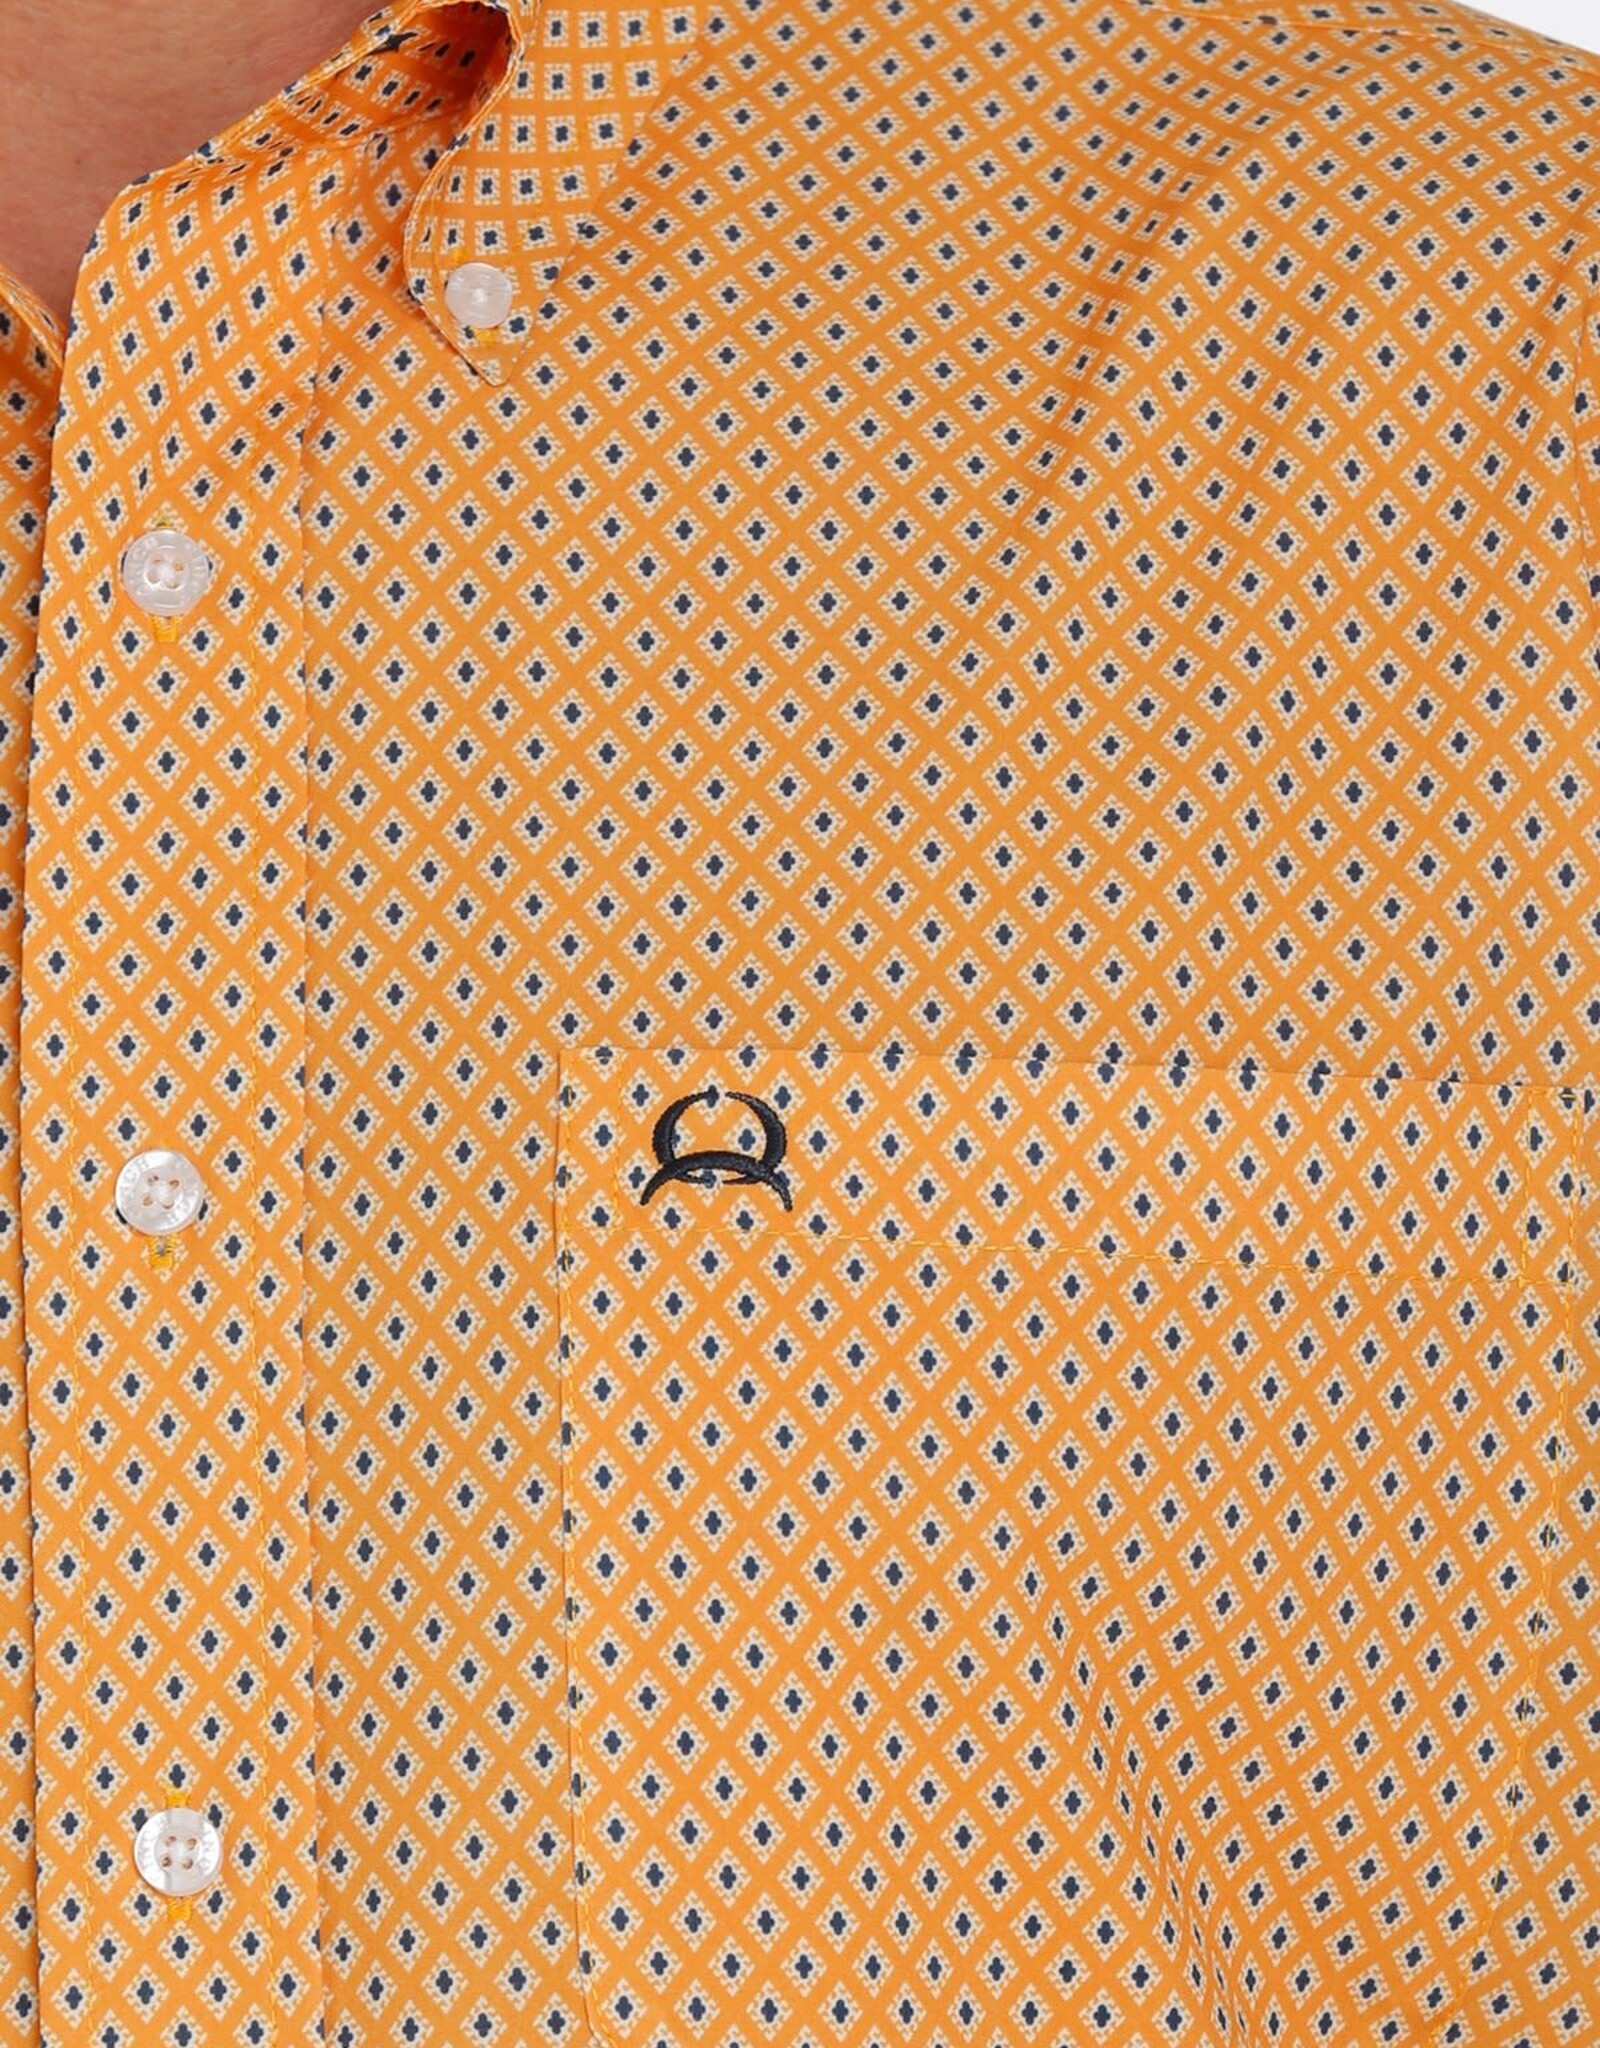 Cinch Cinch Men's Arena Flex Orange Print Short Sleeve Shirt